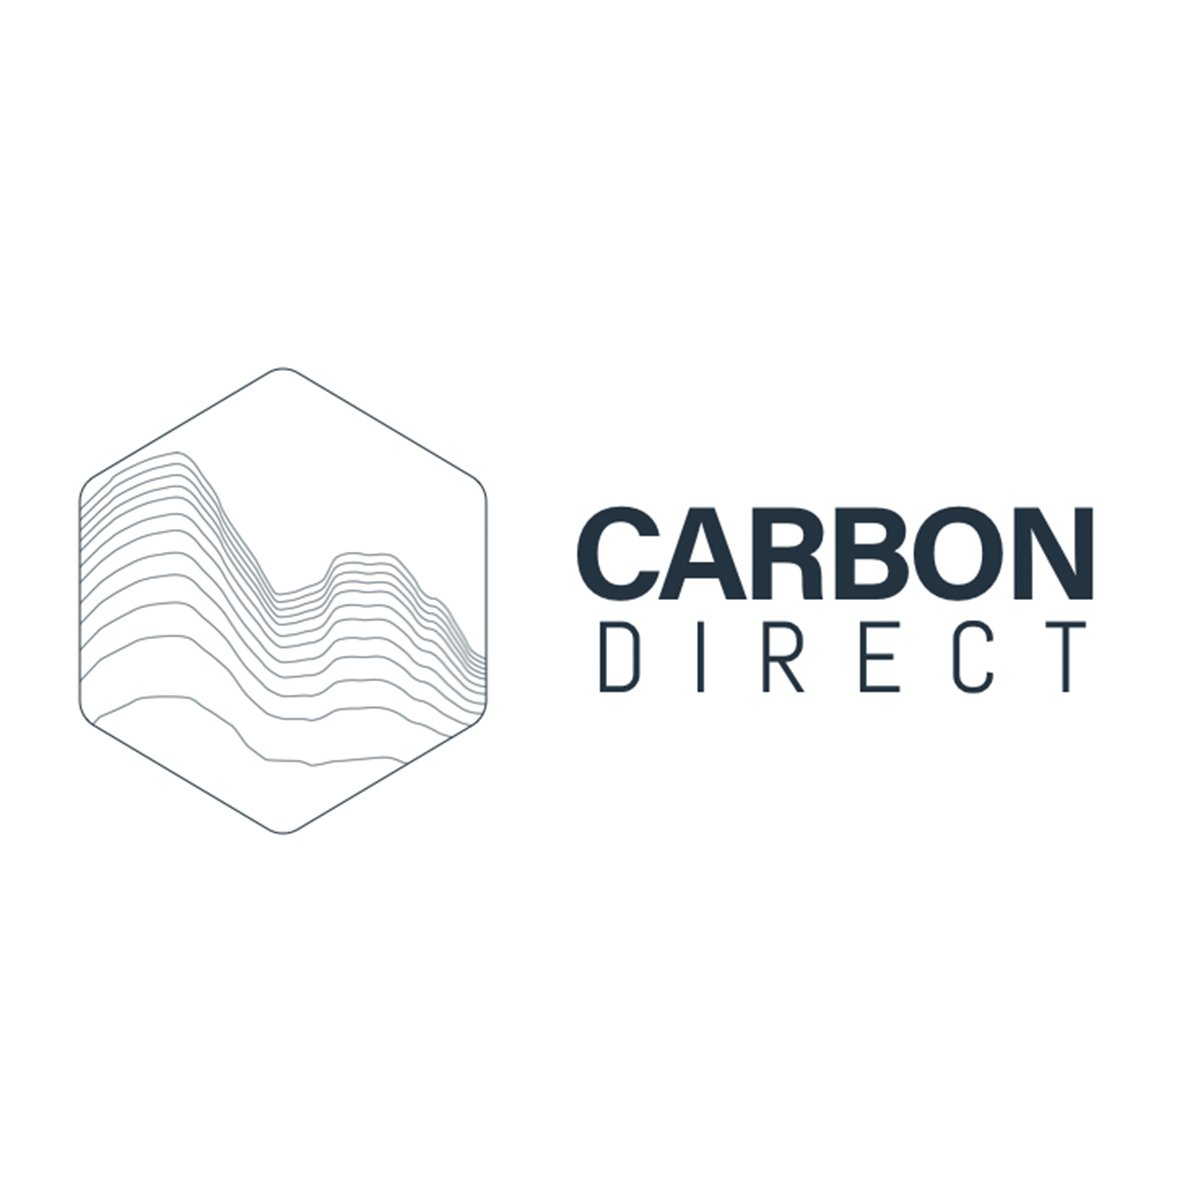 CarbonDirect.jpg